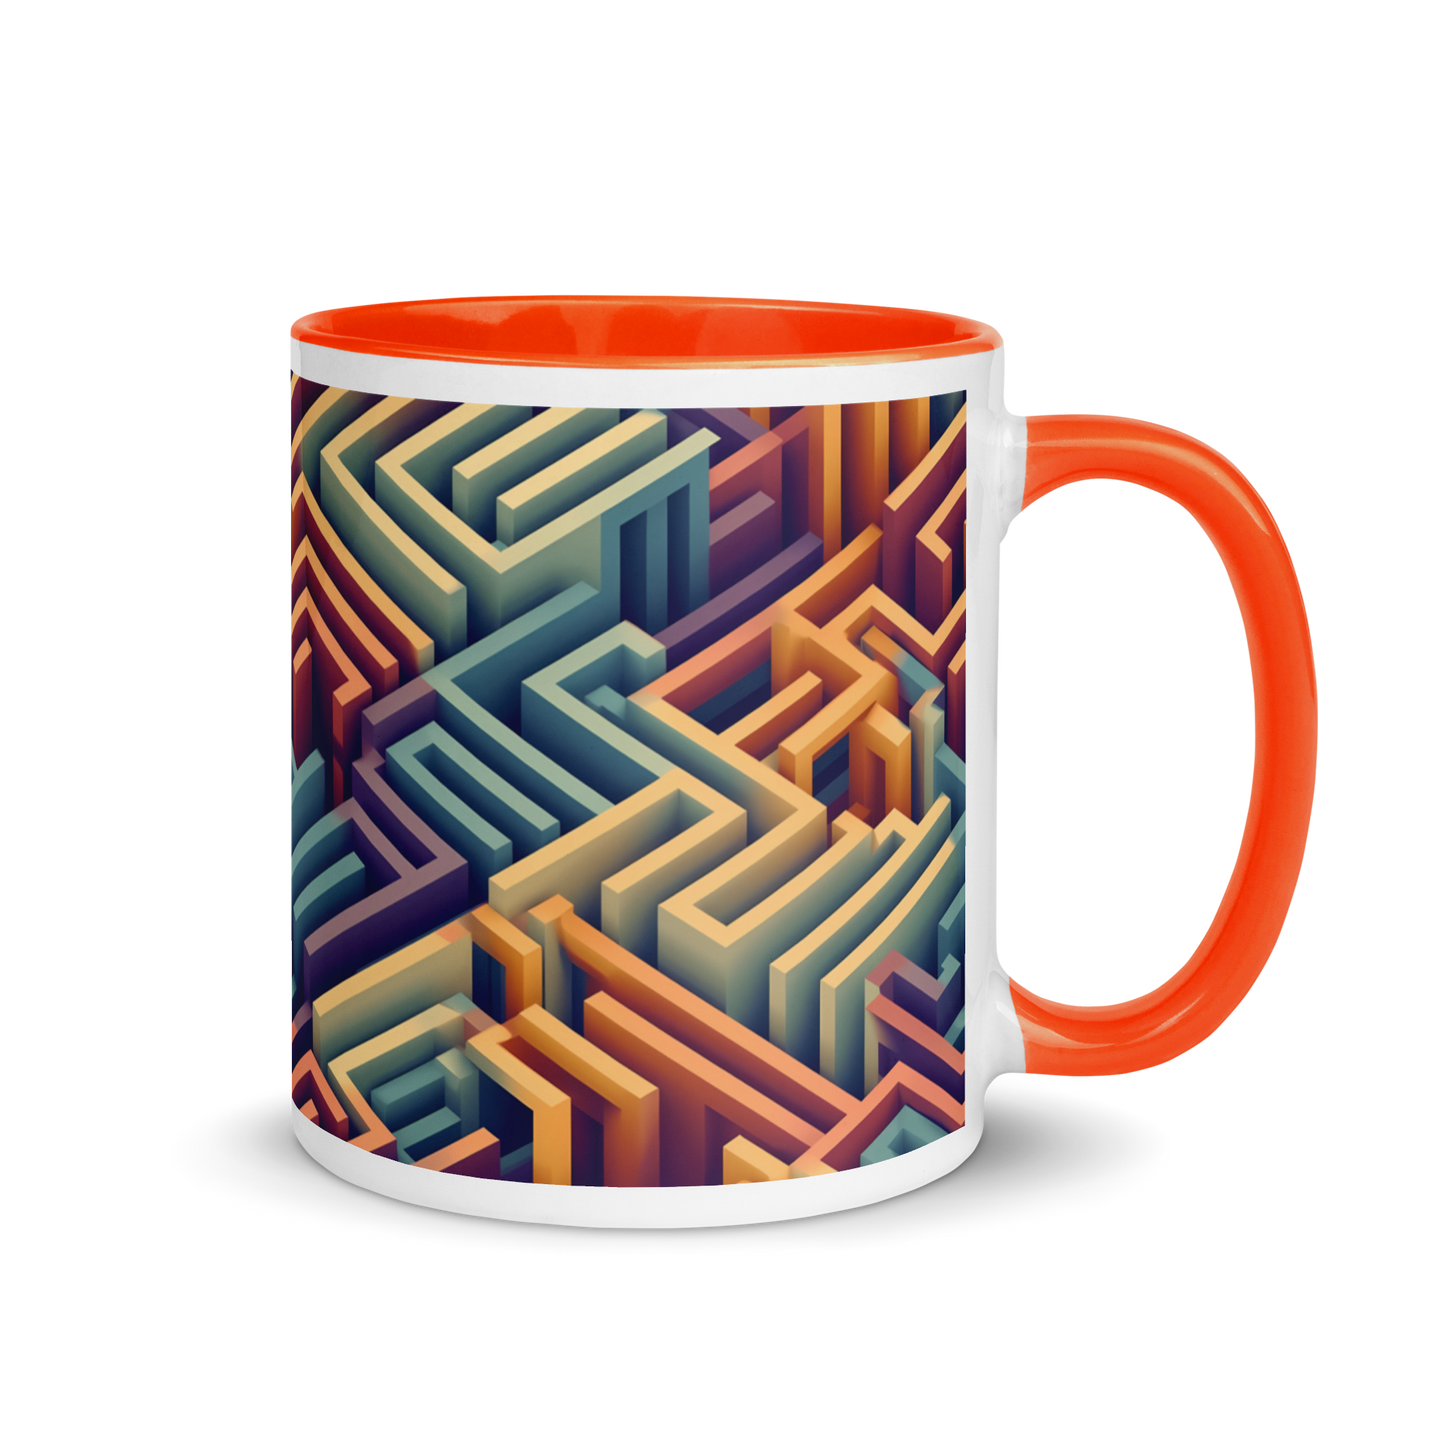 3D Maze Illusion | 3D Patterns | White Ceramic Mug with Color Inside - #3